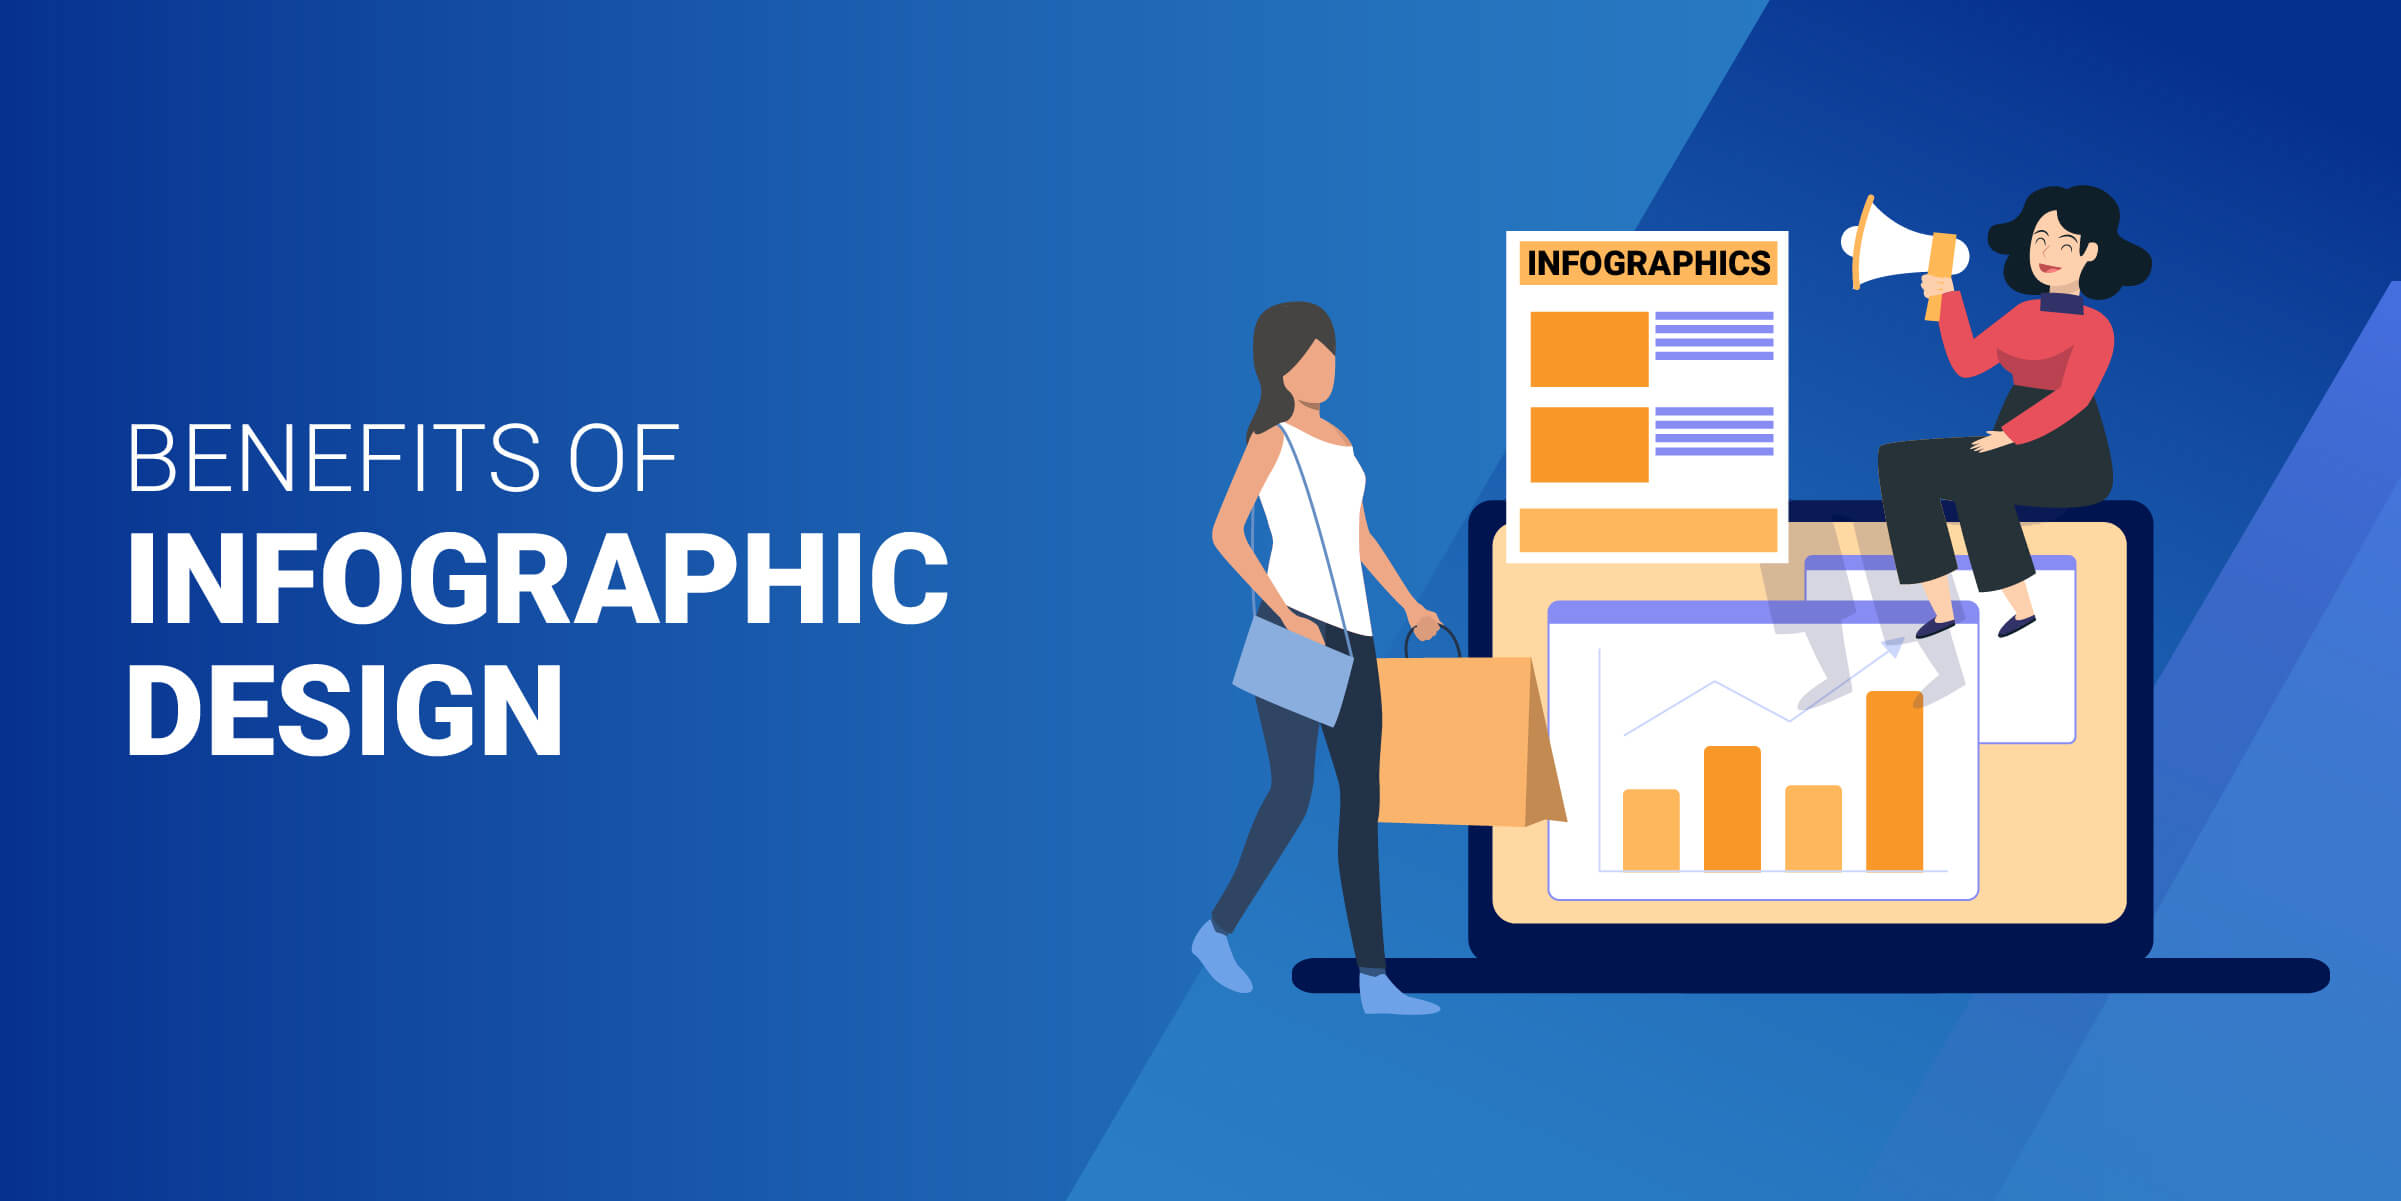 Benefits of Infographic Design